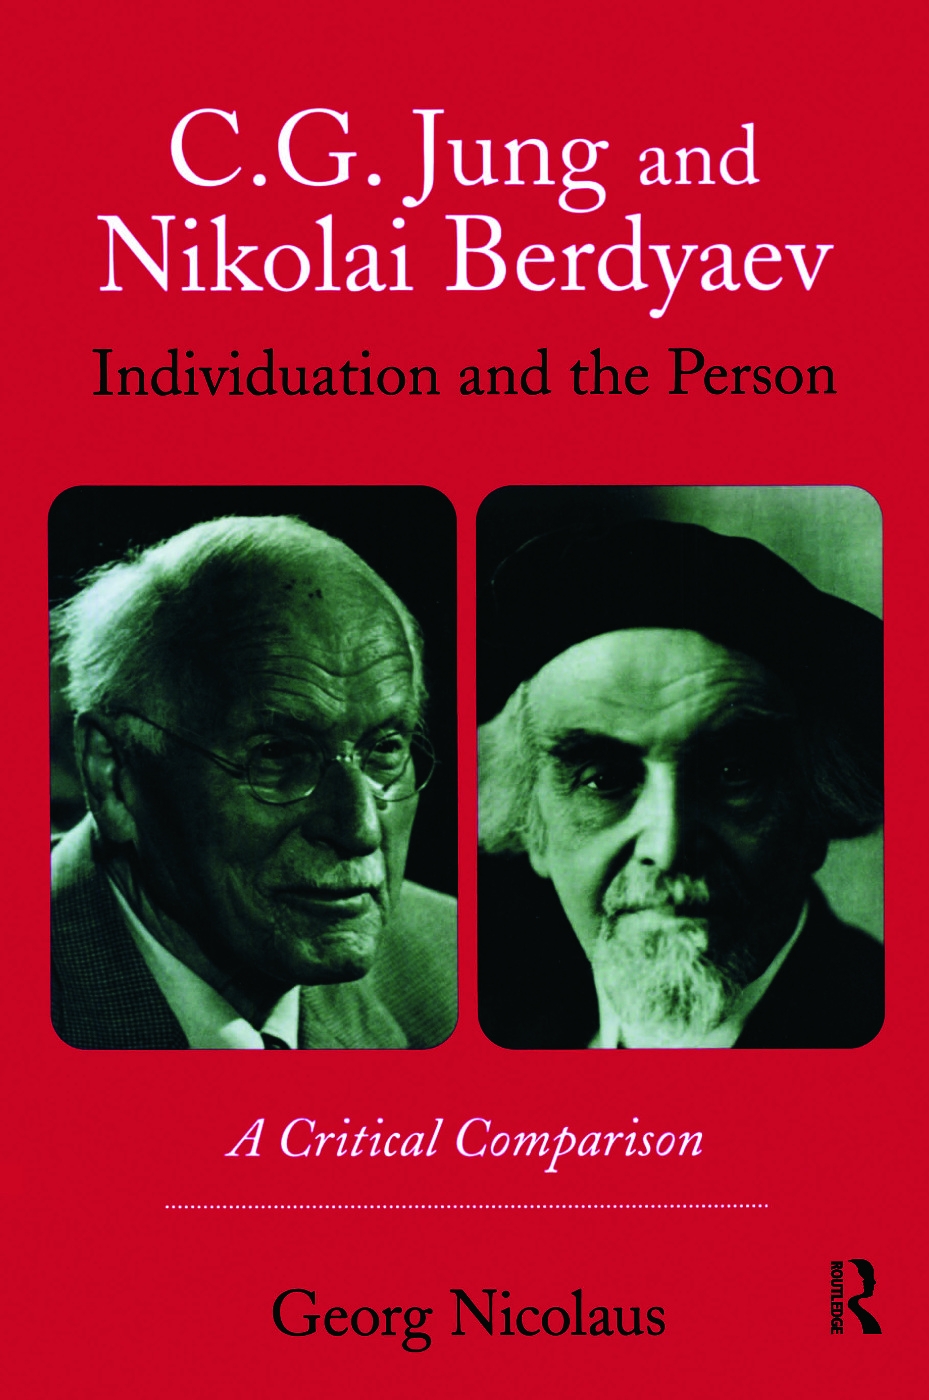 C.G. Jung and Nikolai Berdyaev: Individuation and the Person: A Critical Comparison